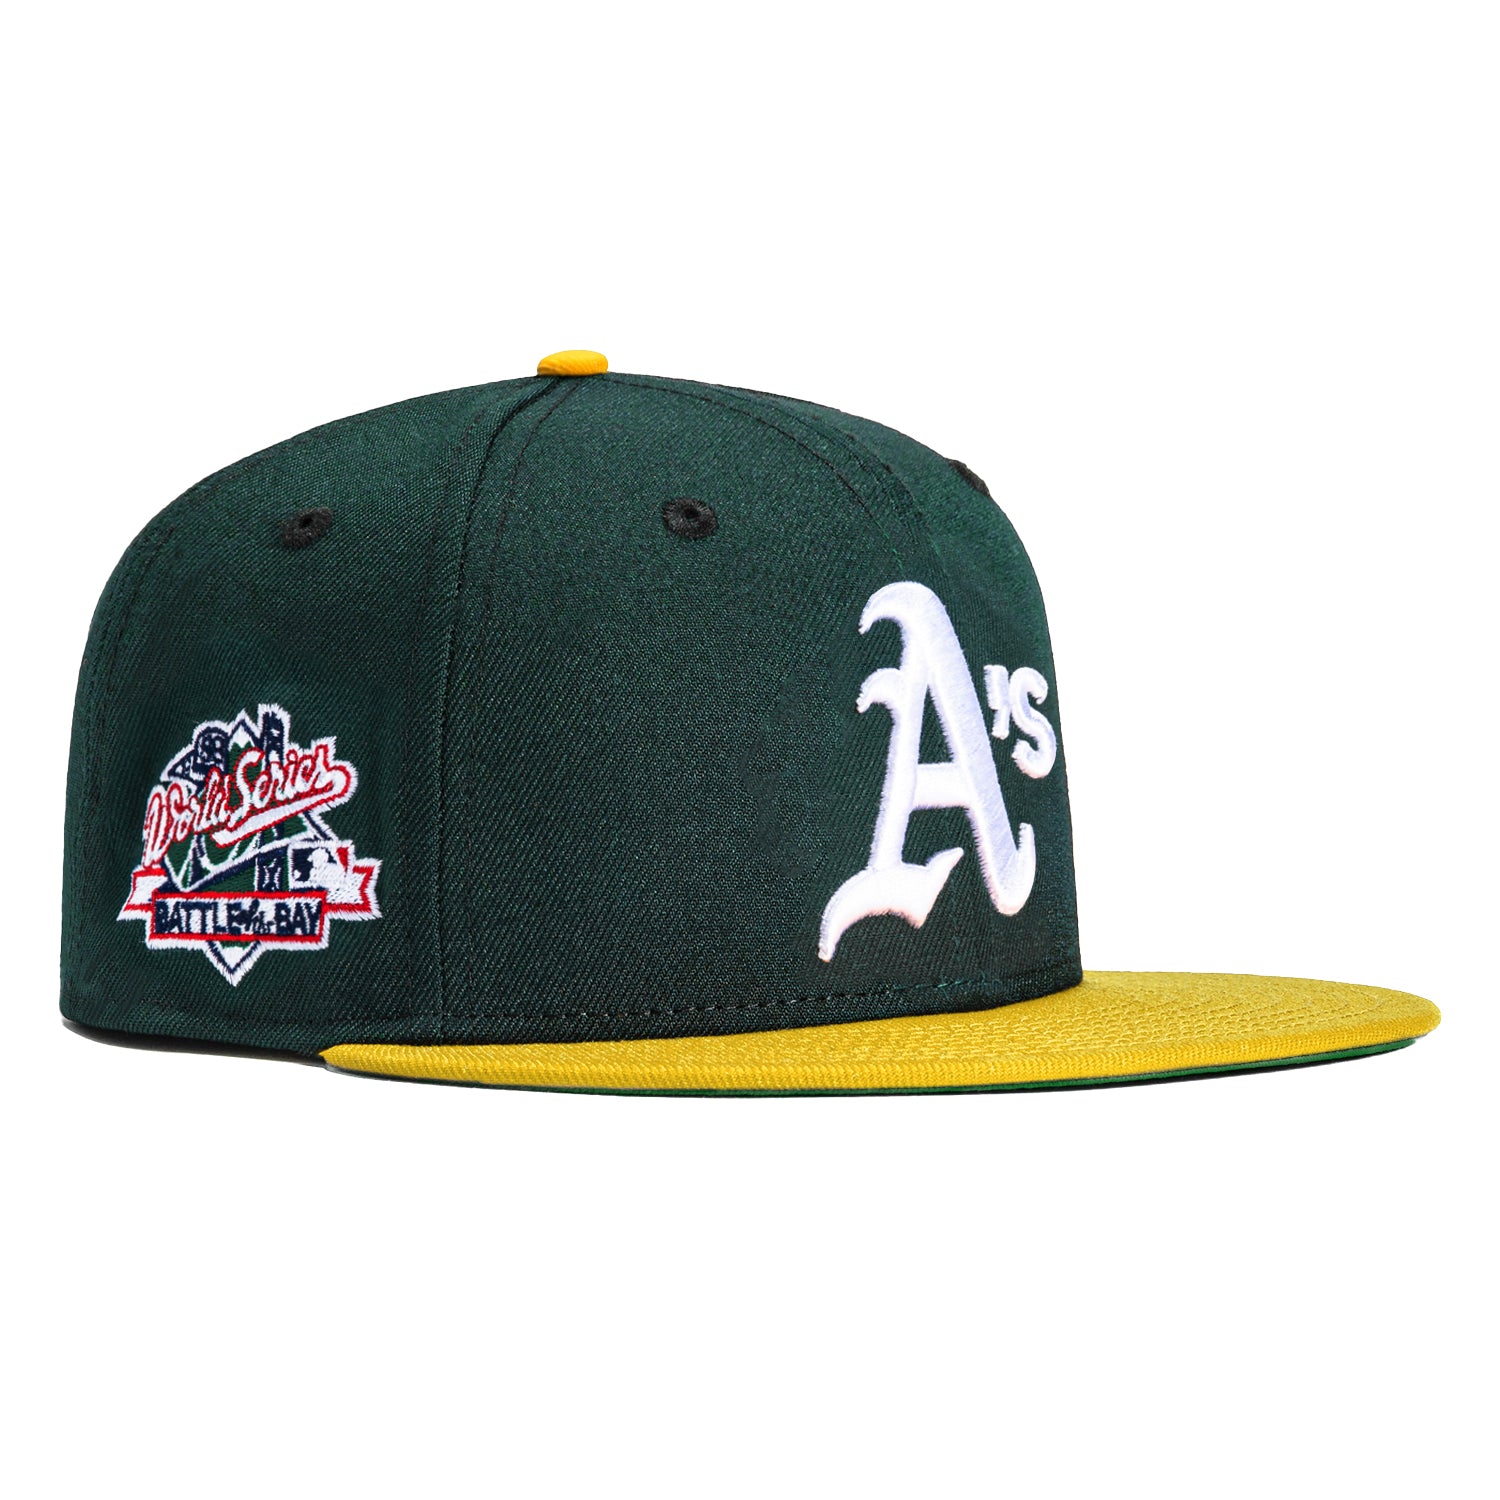 Oakland Athletics 1989 World Series Snapback Hat